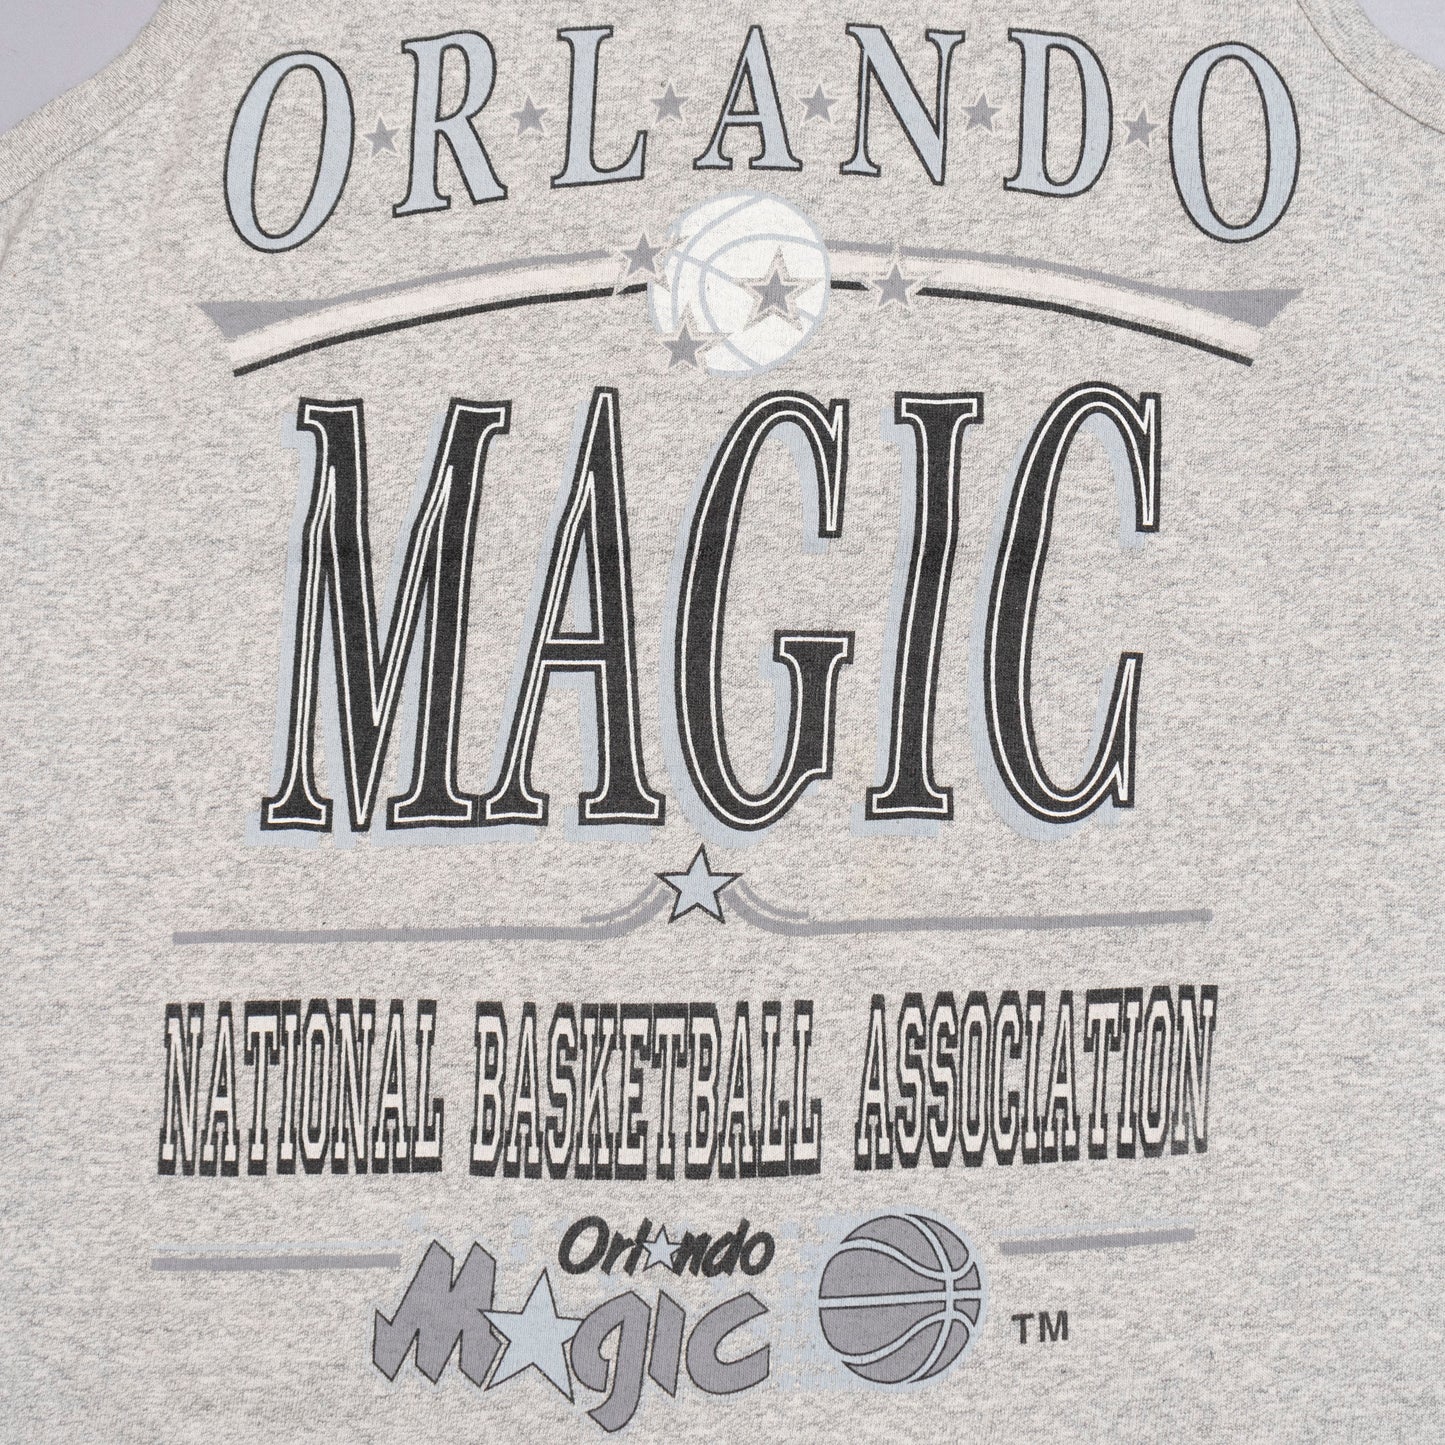 NBA Orlando Magic Tanktop, M